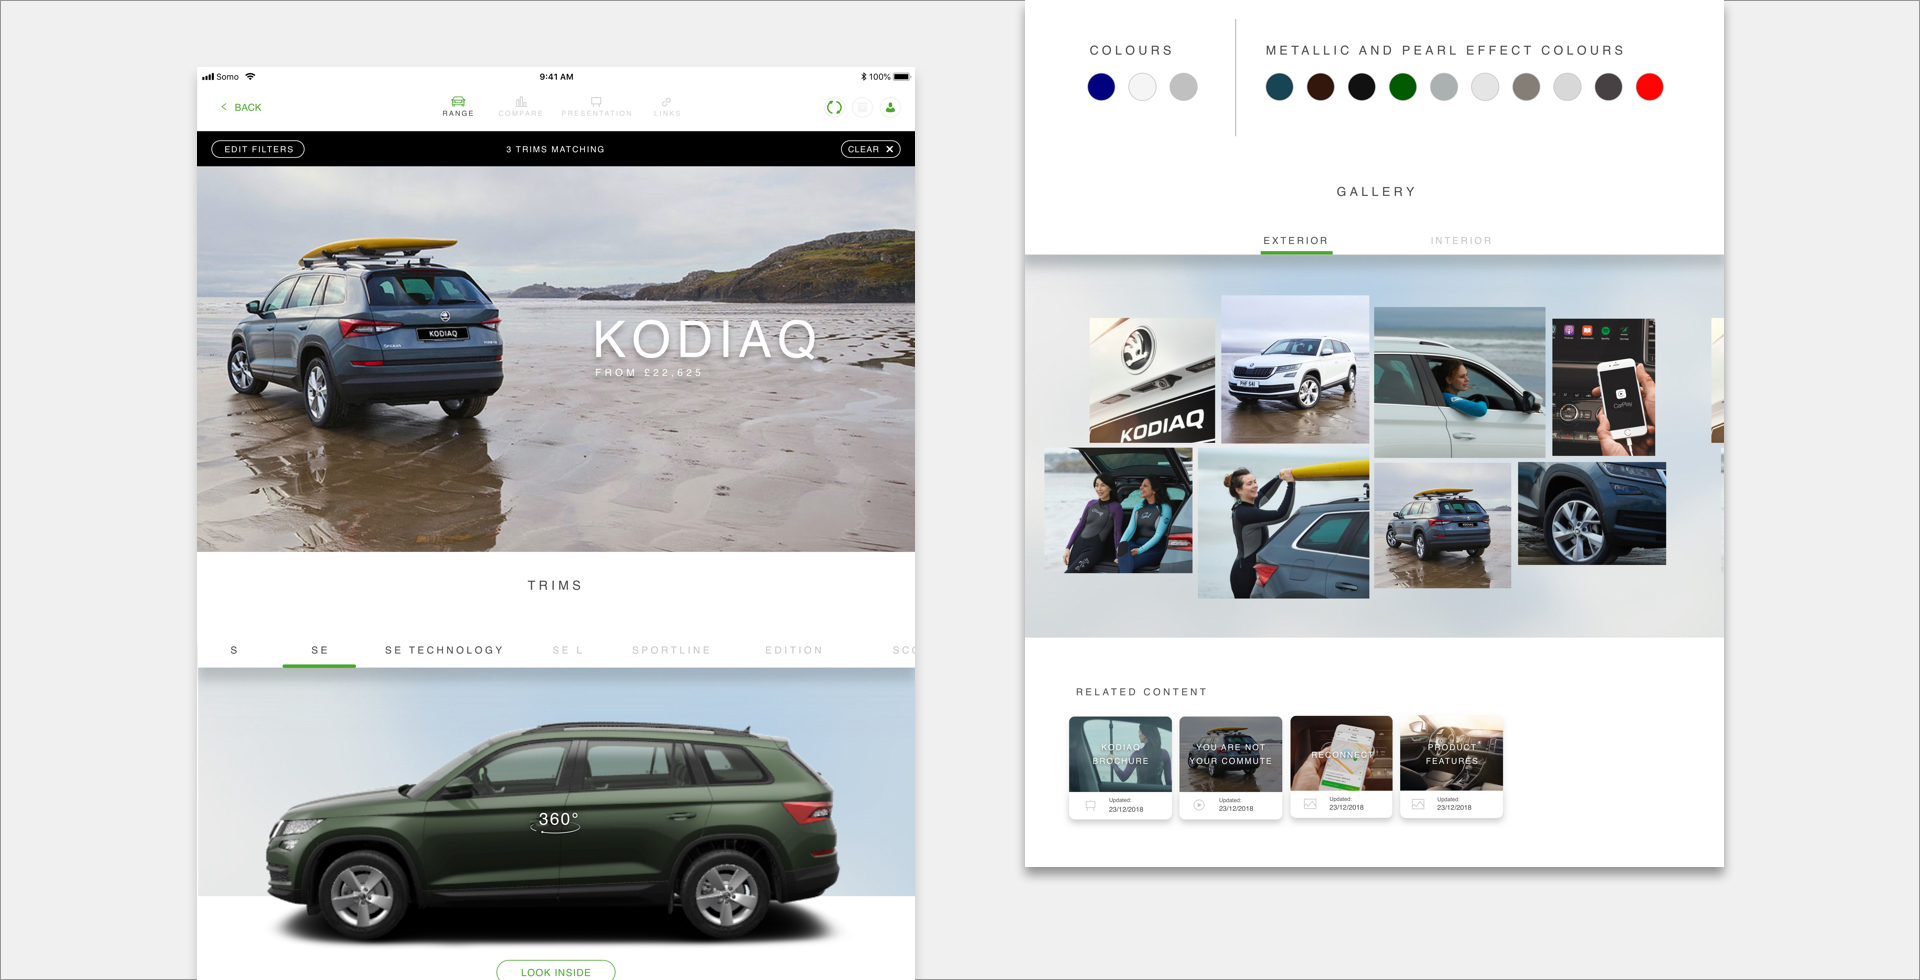 Škoda Kodiaq details page screenshots